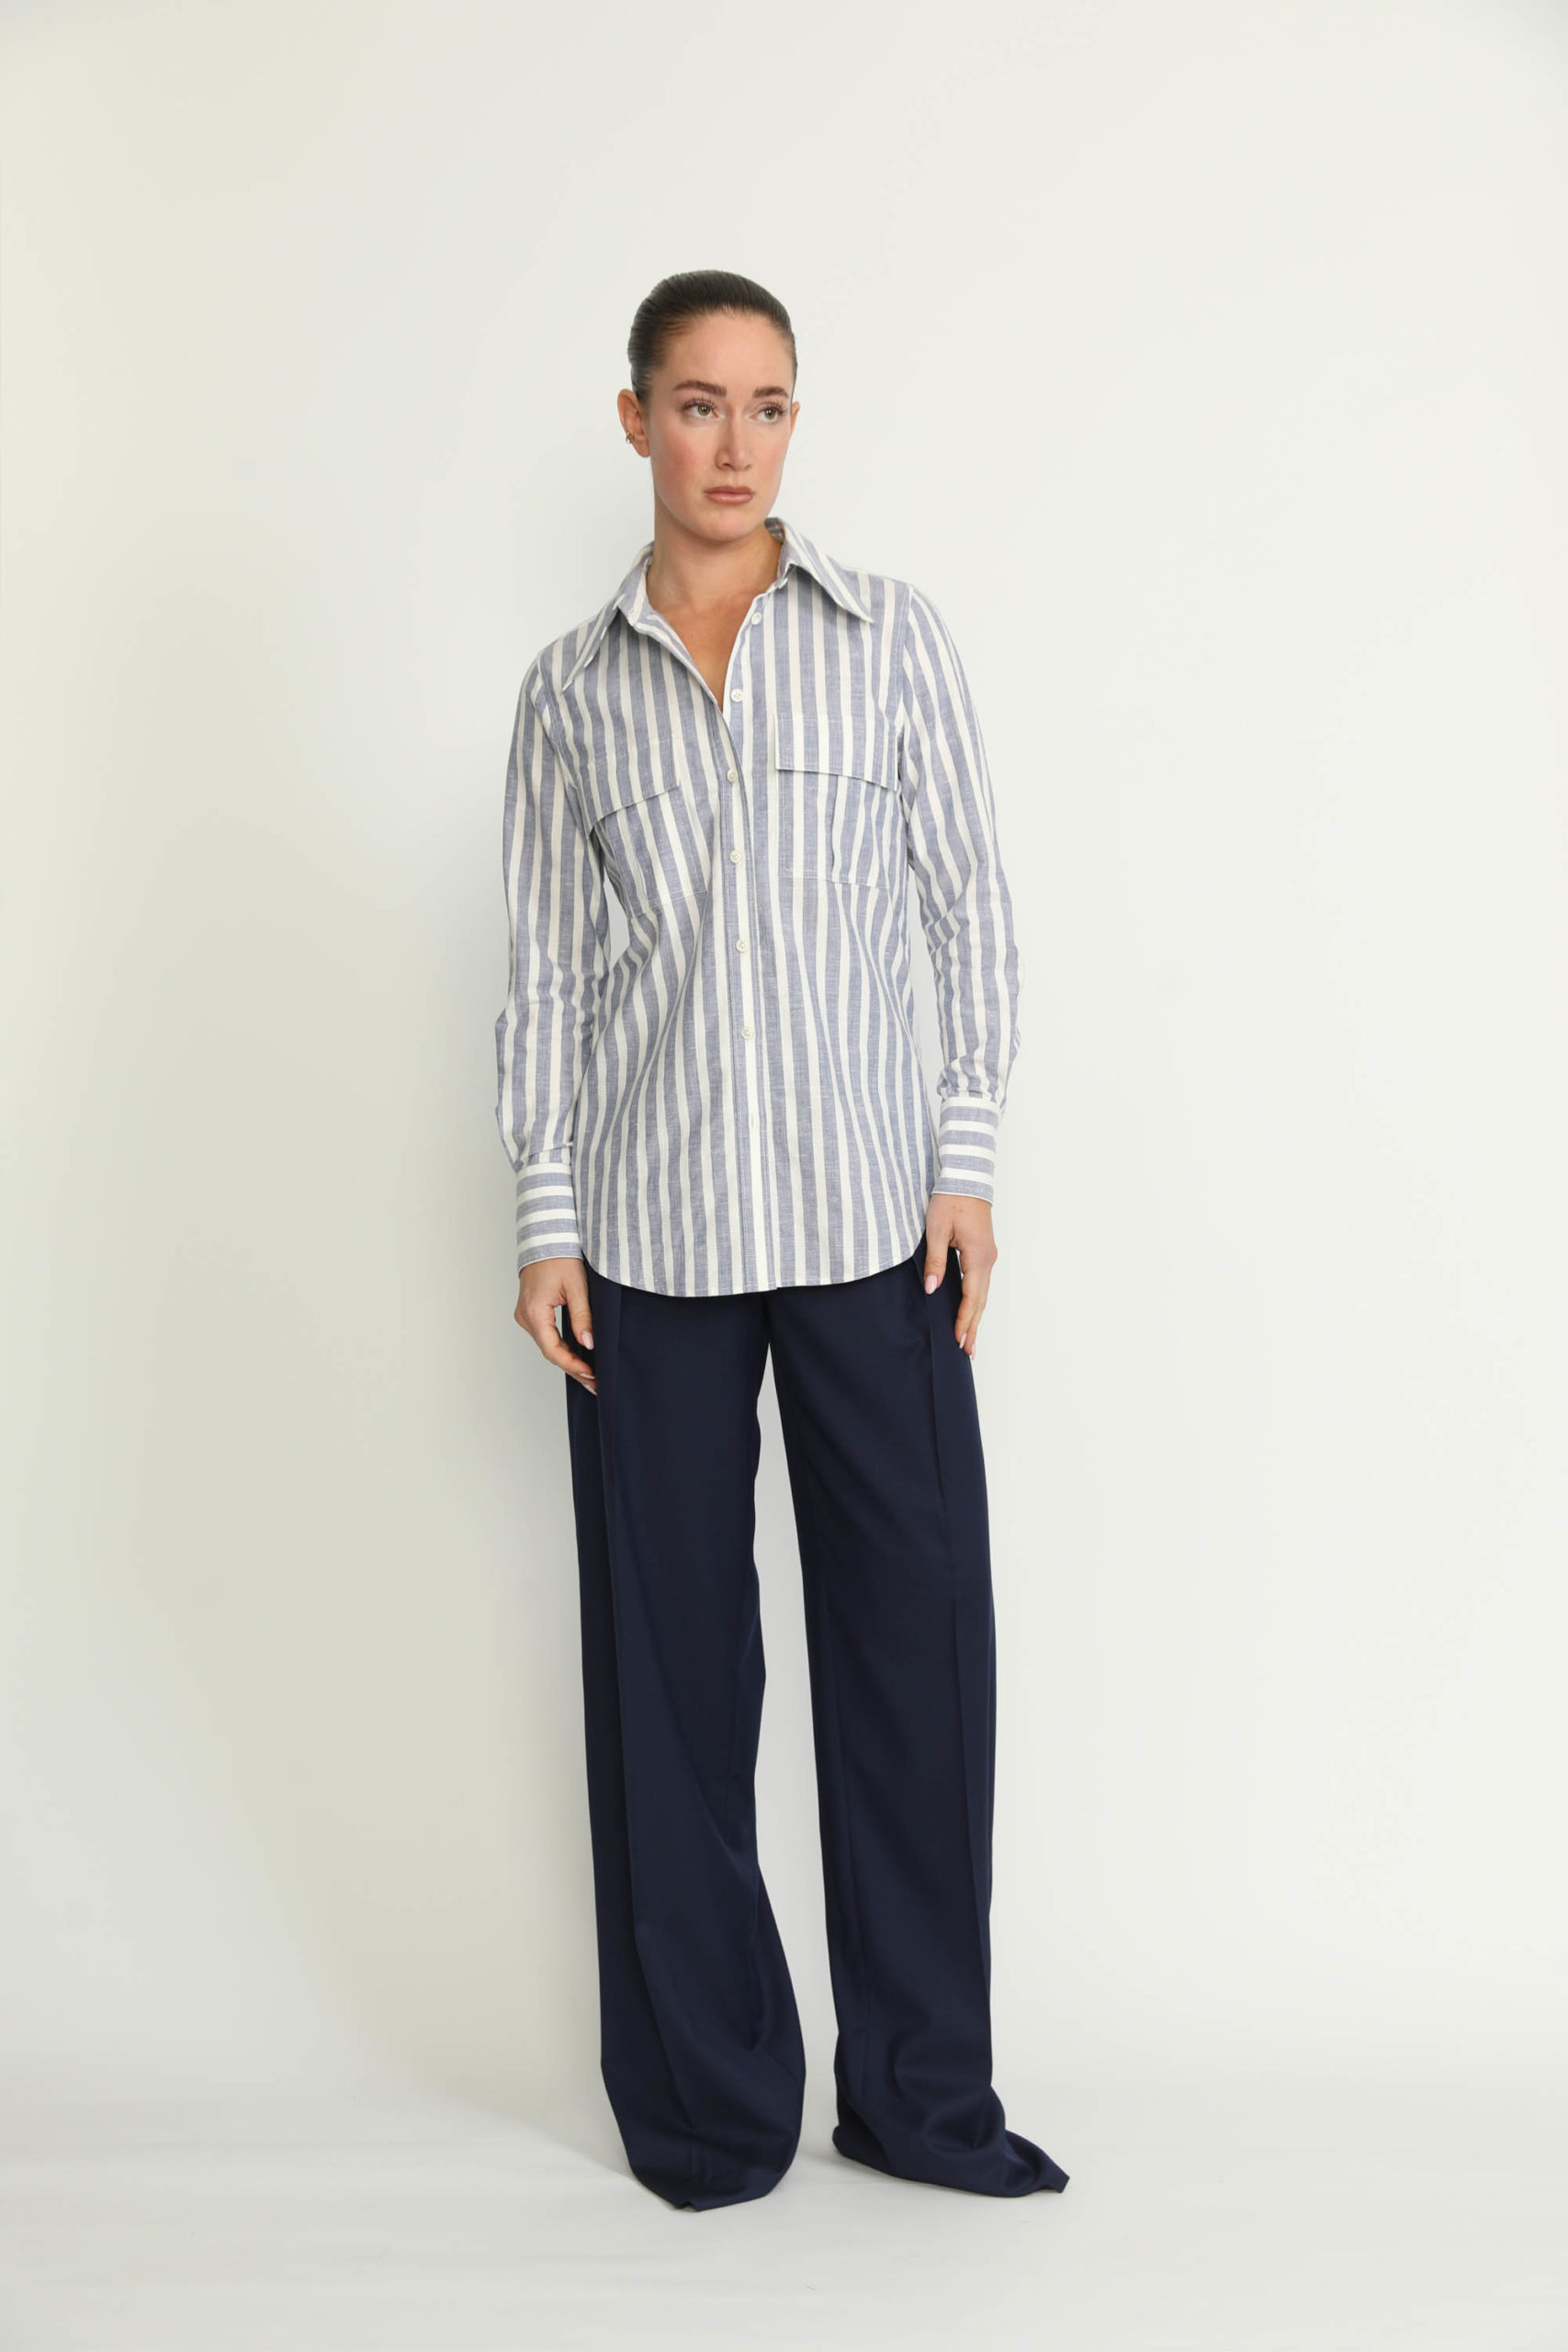 Metz Shirt – Metz Blue & White Striped Shirt